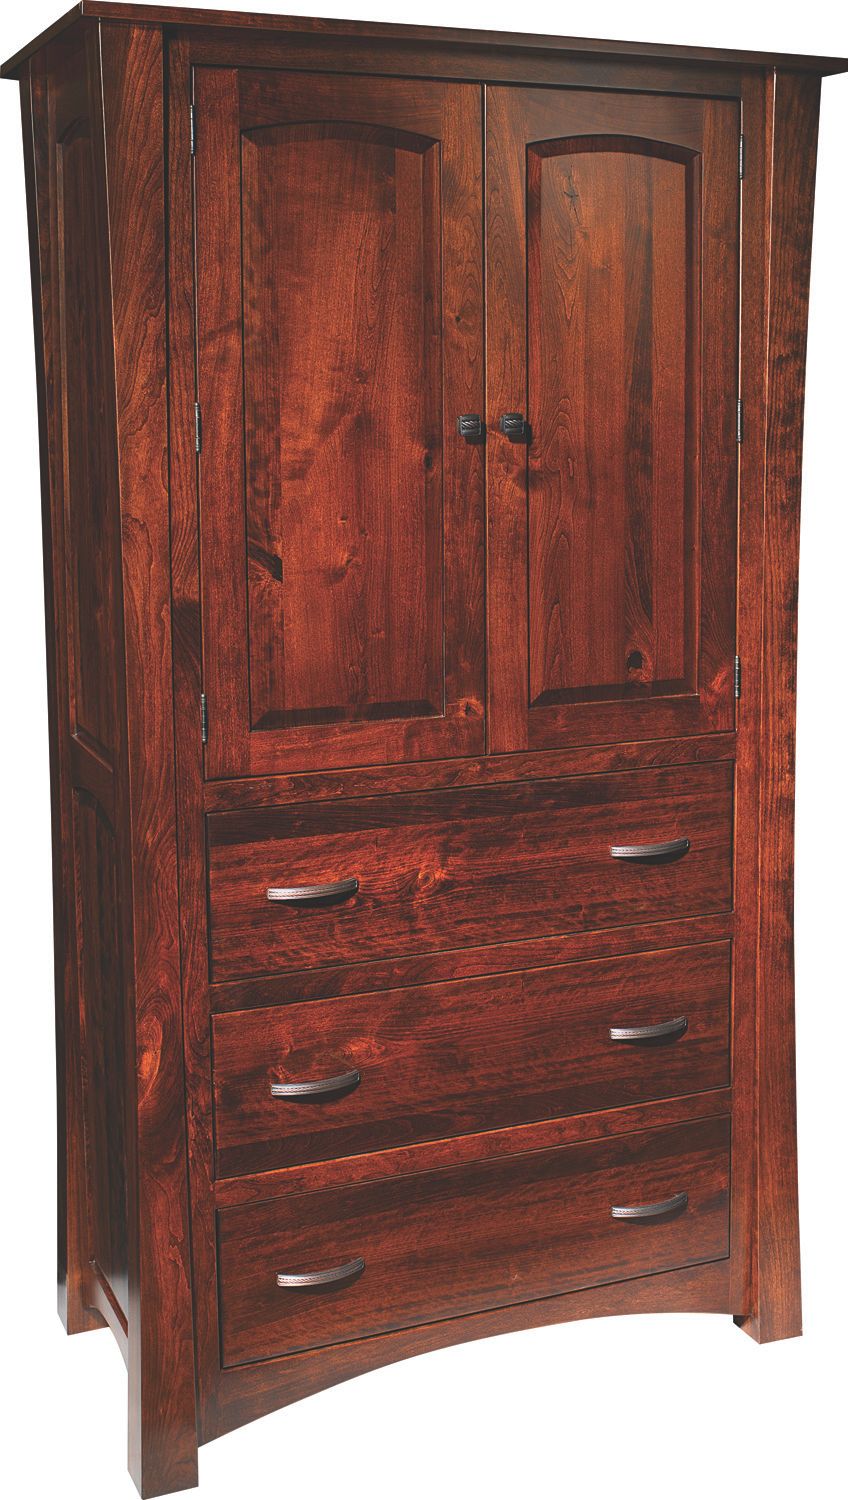 Fw woodbury armoire